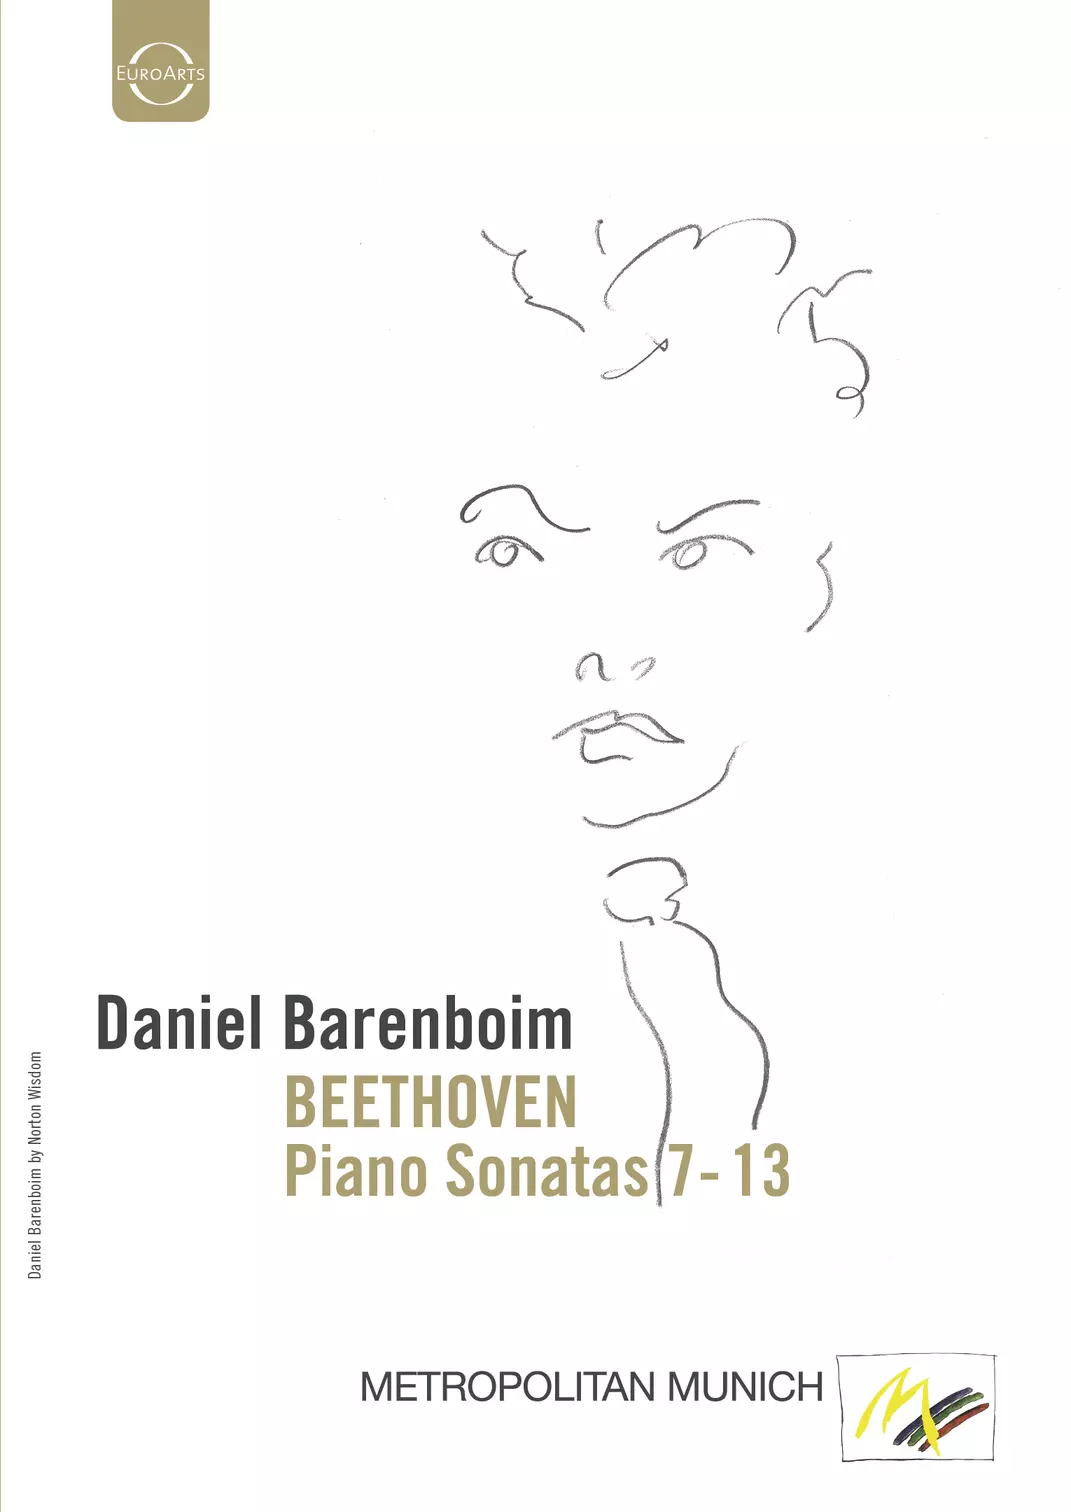 Barenboim plays Beethoven Piano Sonatas Nos. 7-13, Part 2/5